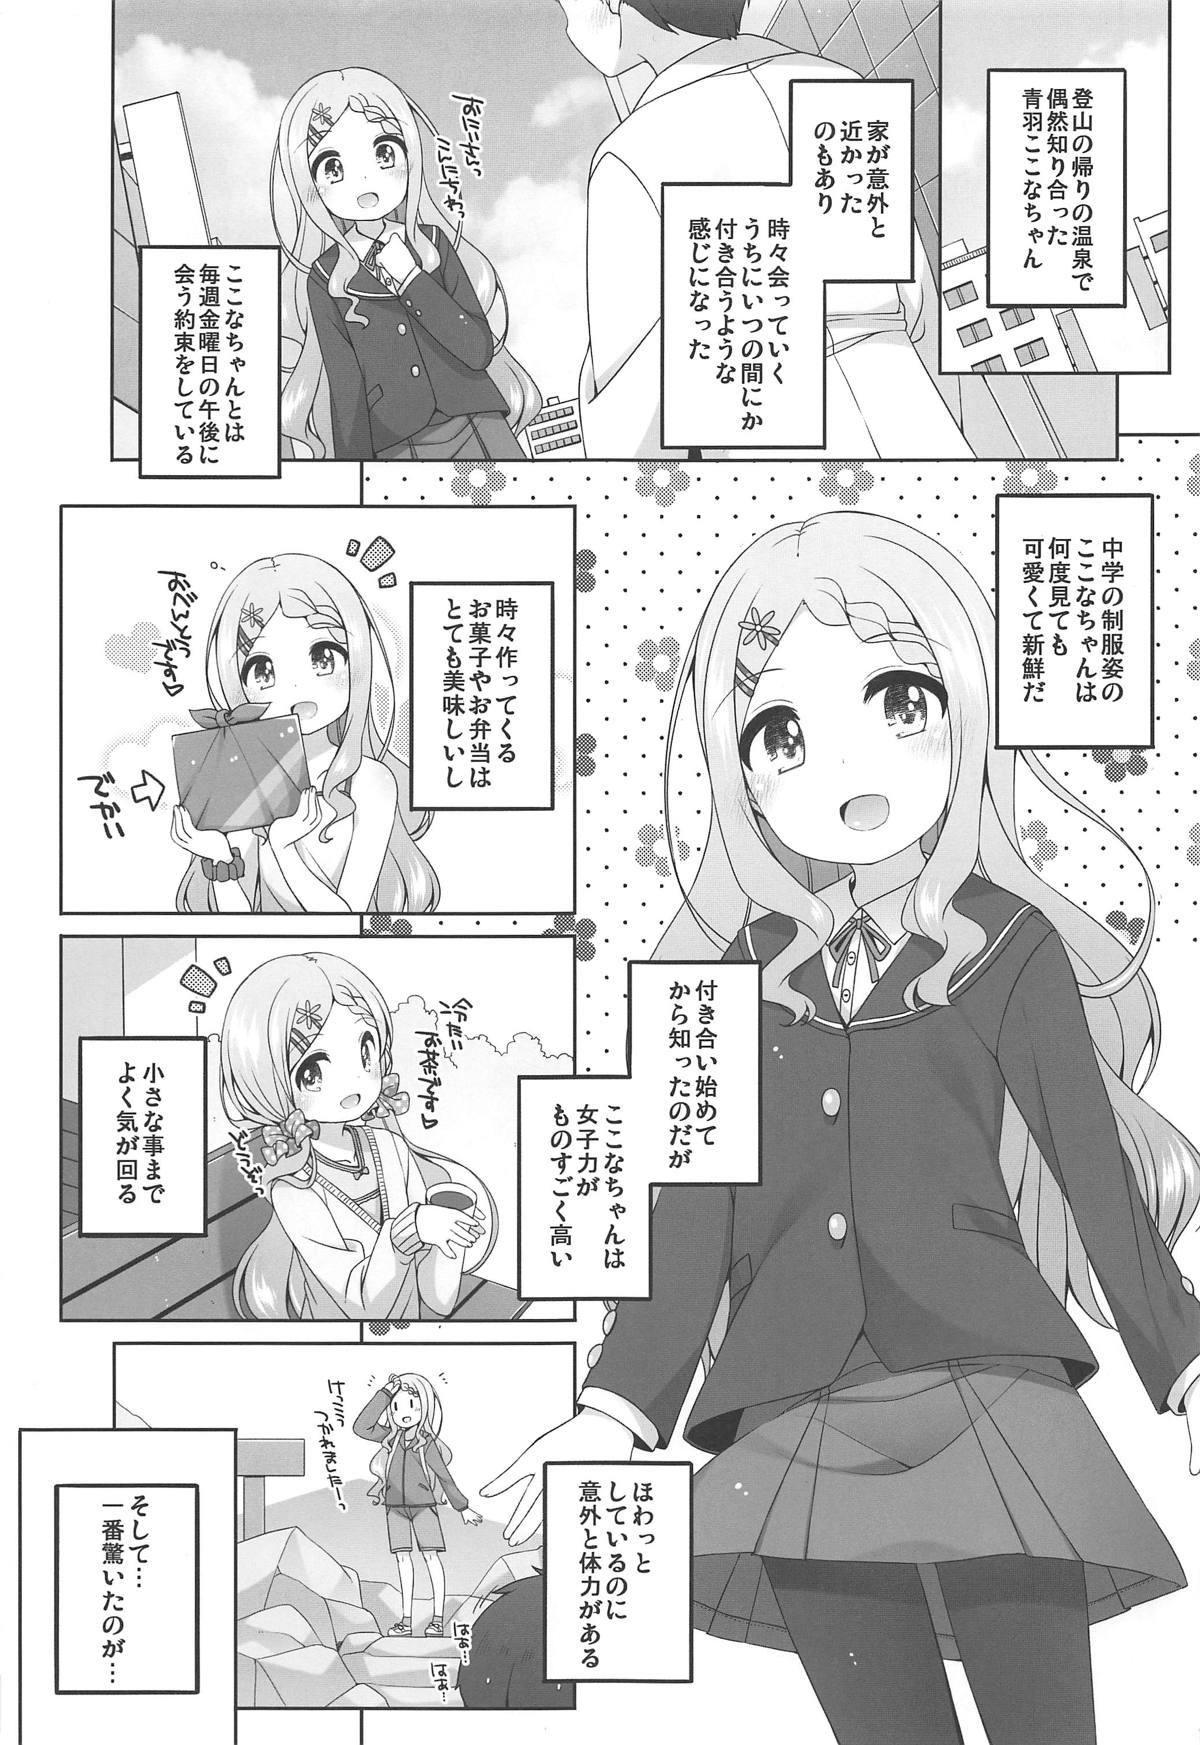 Office Sex Kokona-chan Kawaii. - Yama no susume Urine - Page 4